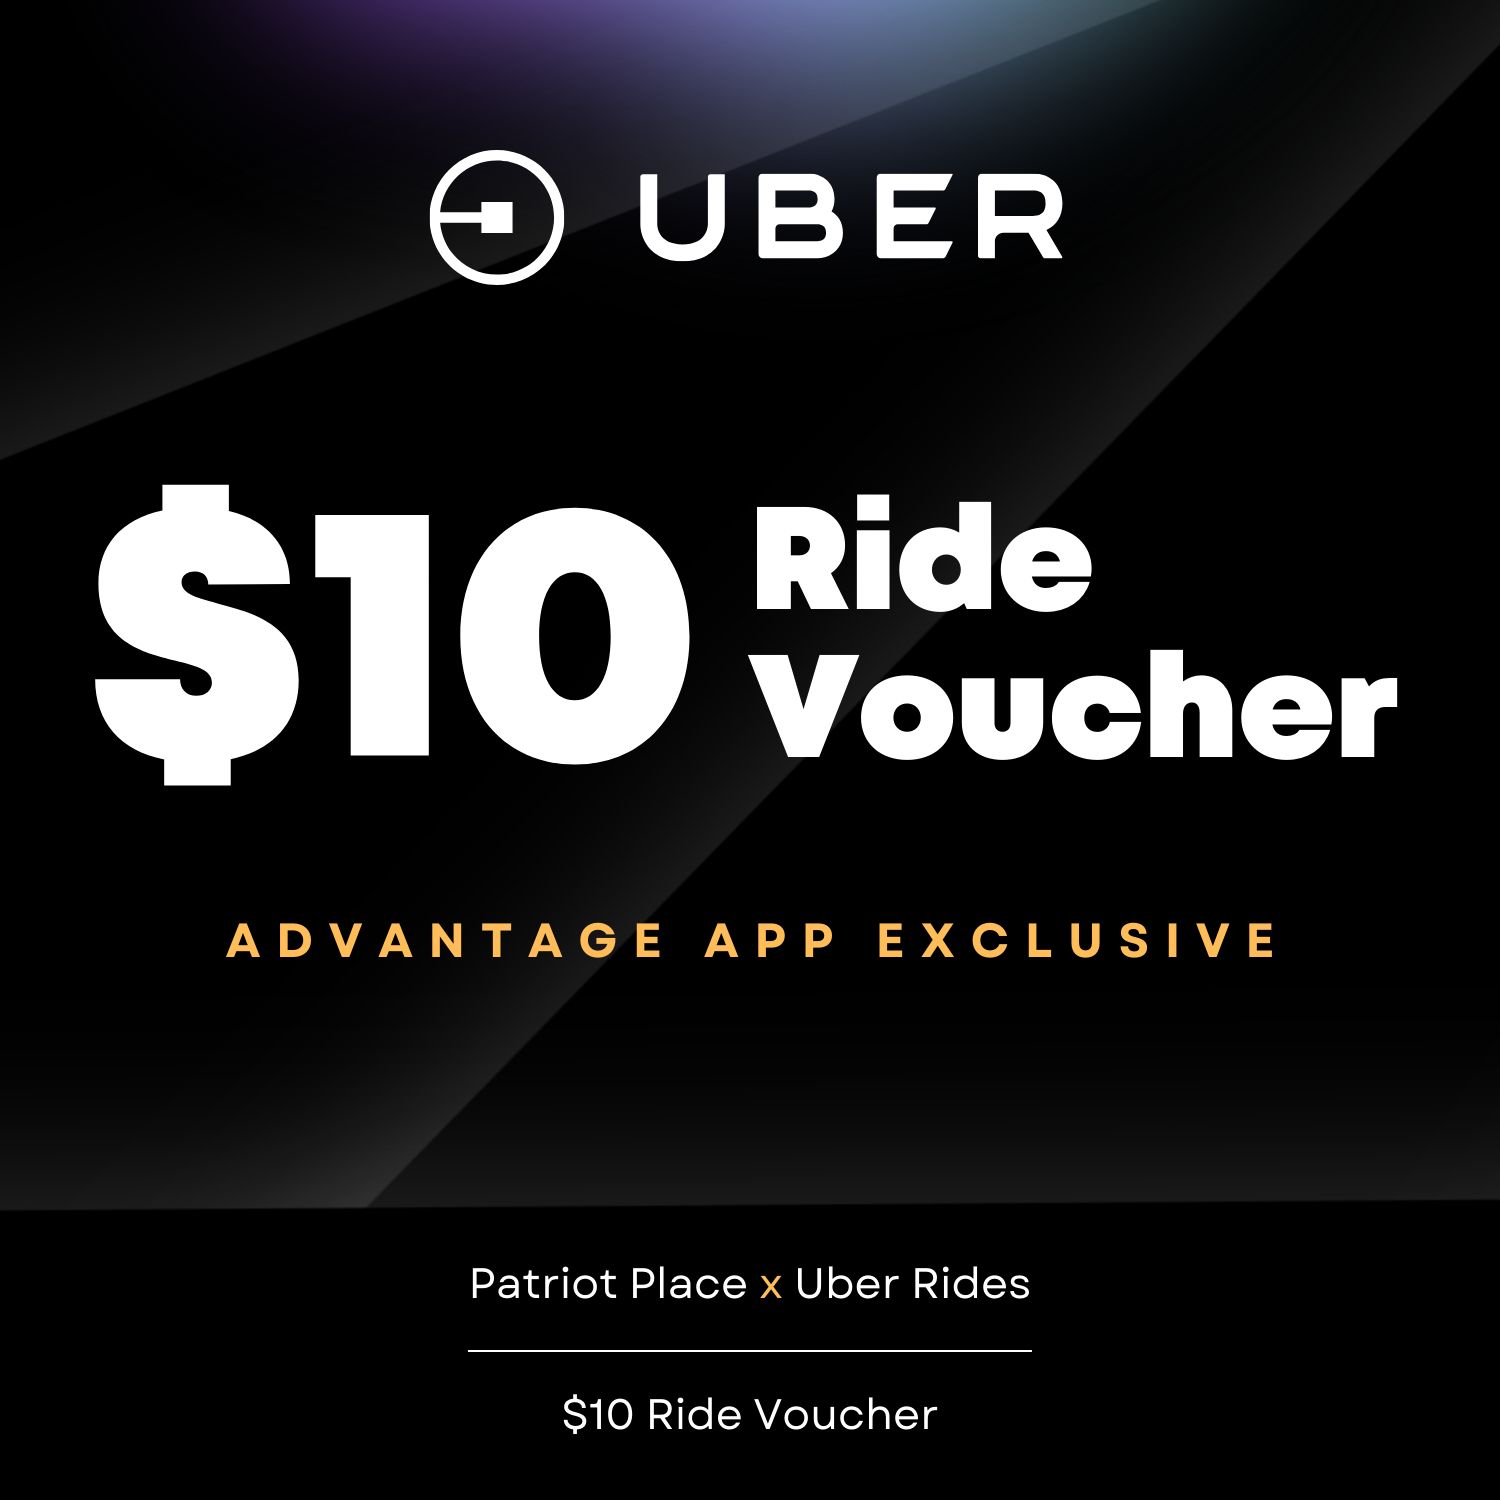 Uber $10 Ride Voucher